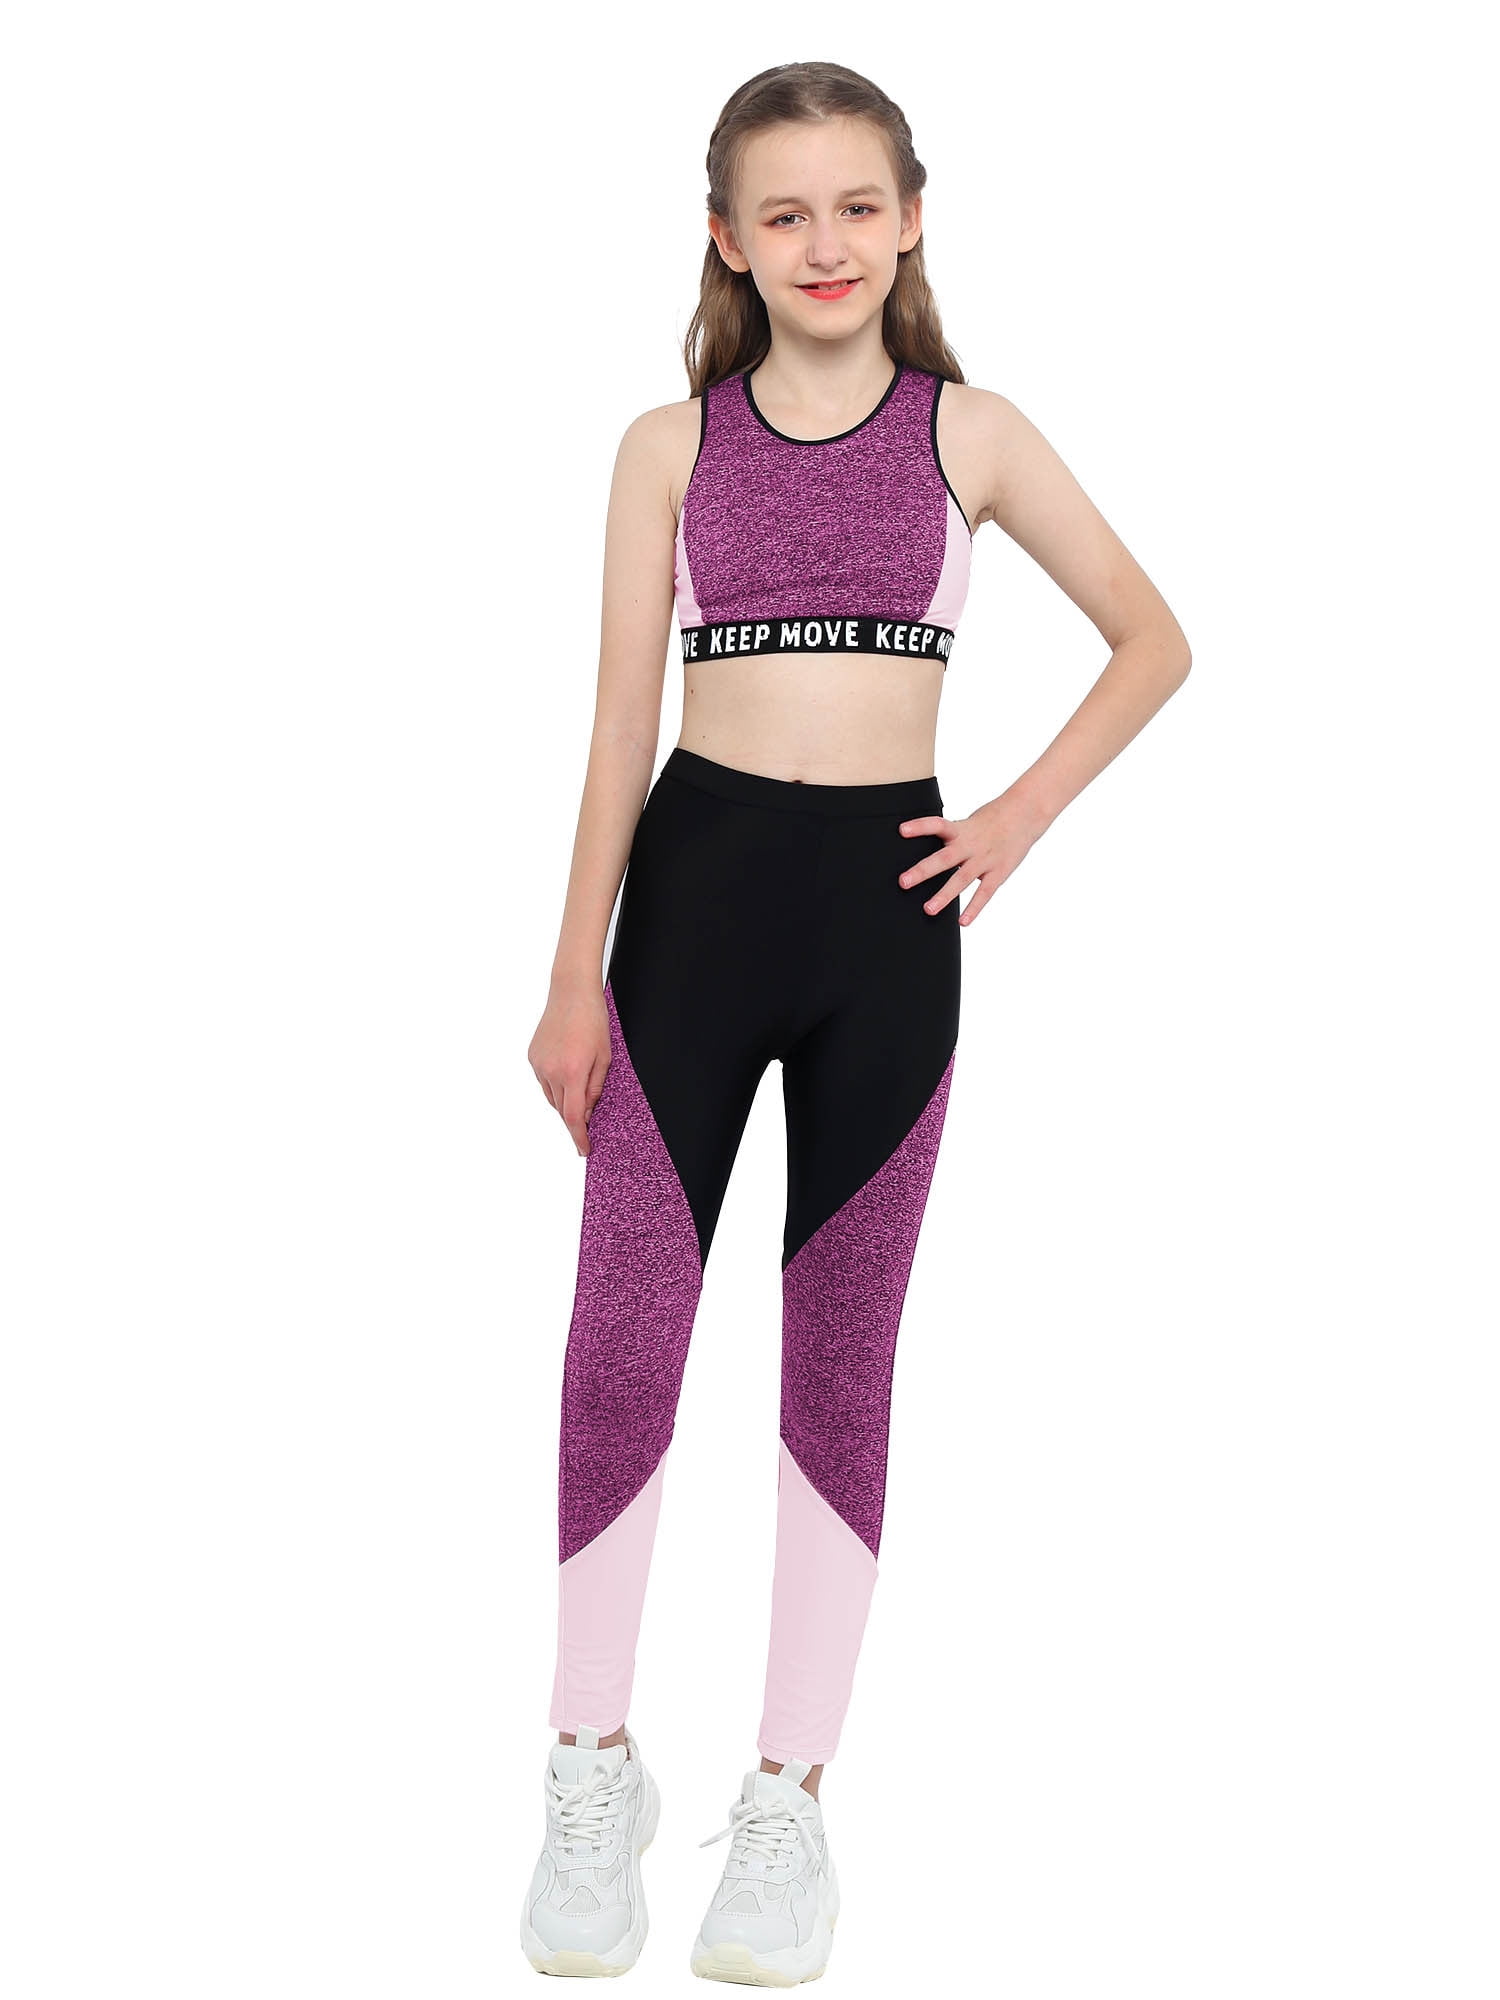 YEAHDOR Kids Girls Activewear Athletic Crop Top with Leggings Gym